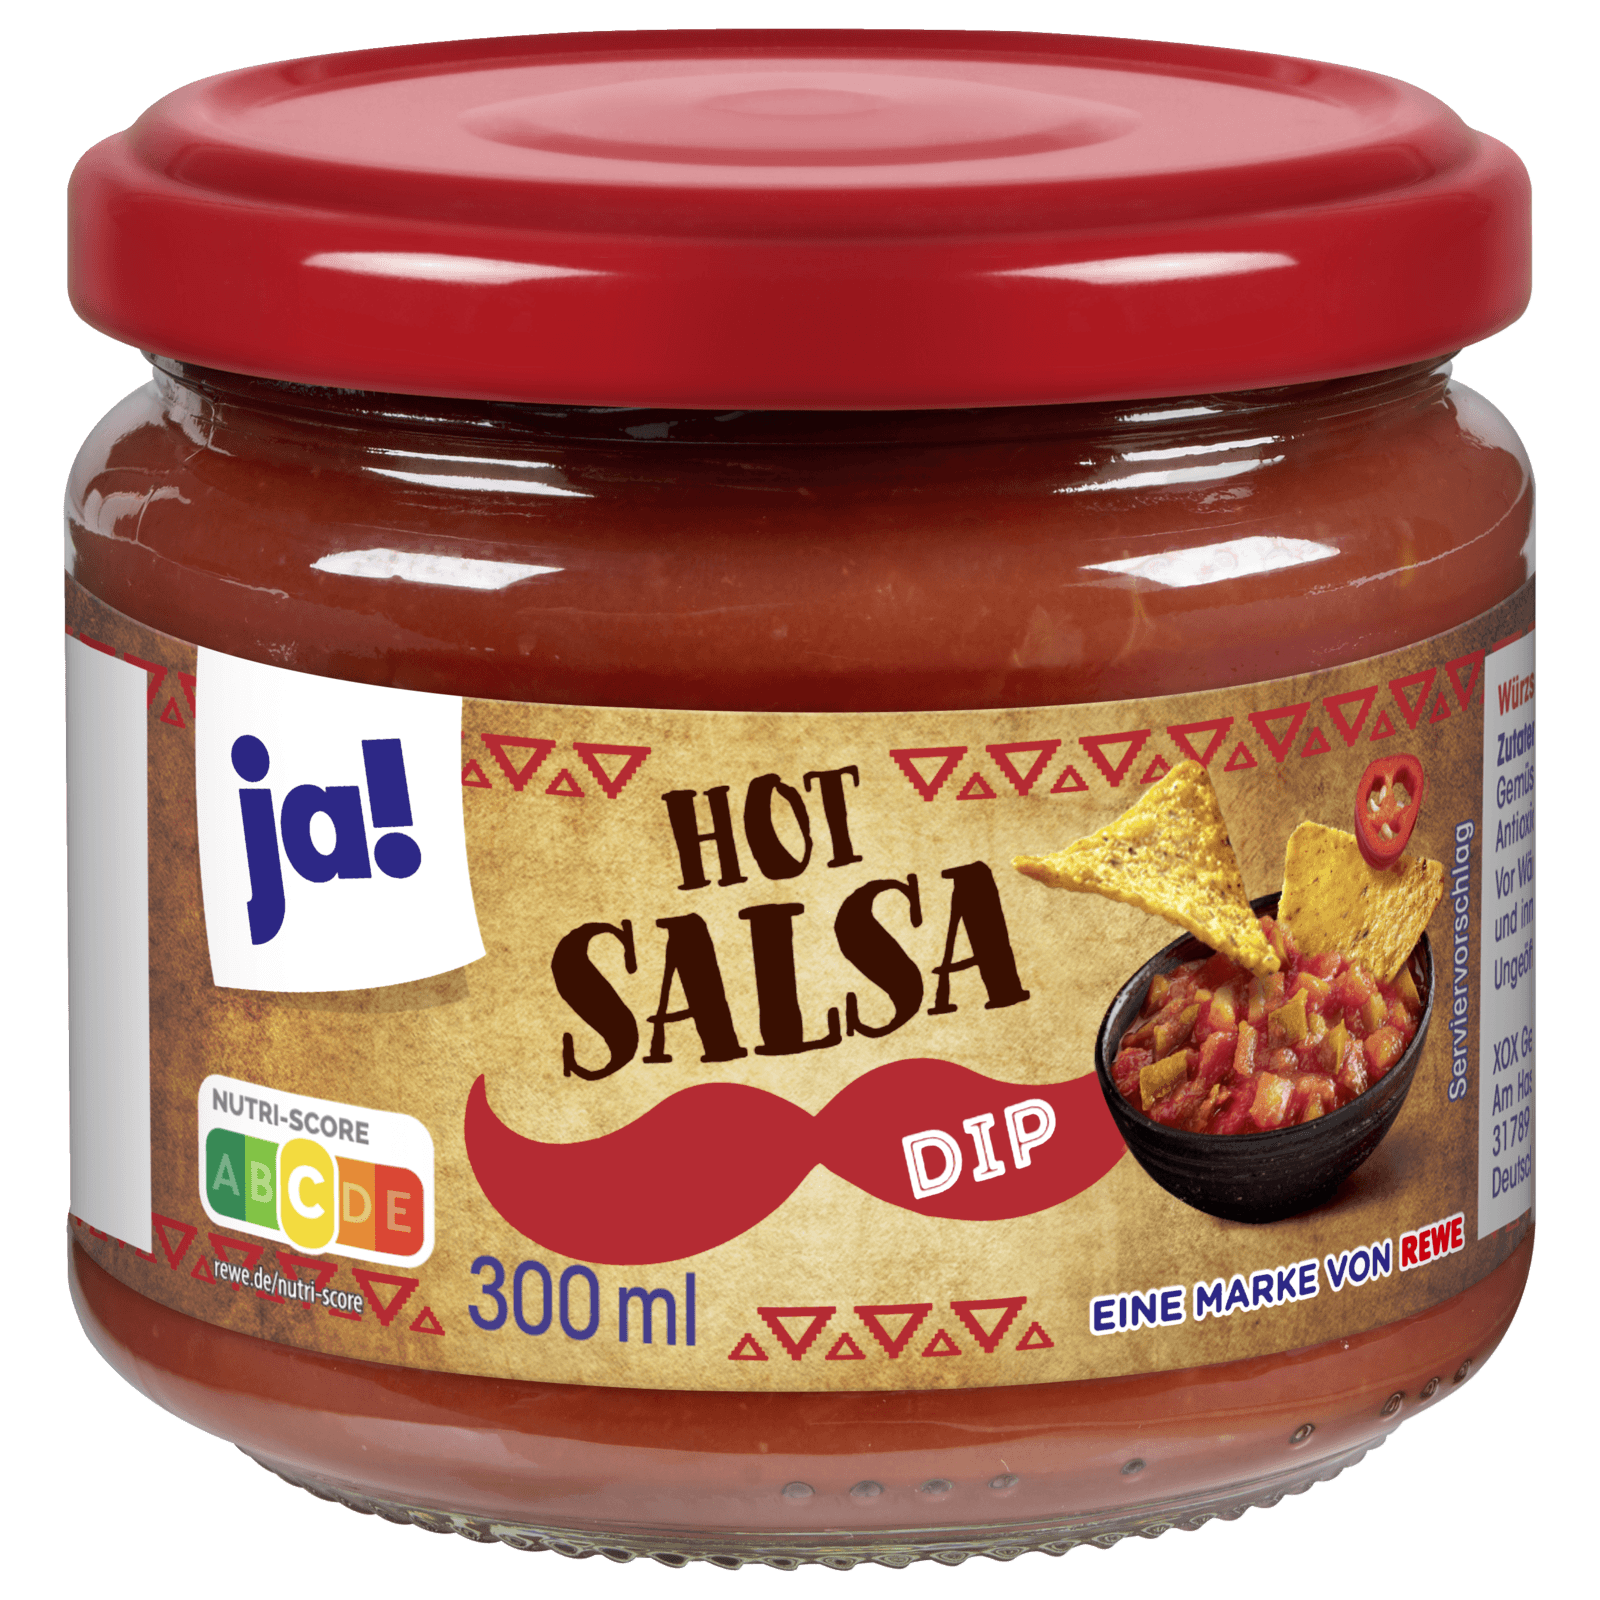 ja! Hot Salsa Dip 300ml bei REWE online bestellen!